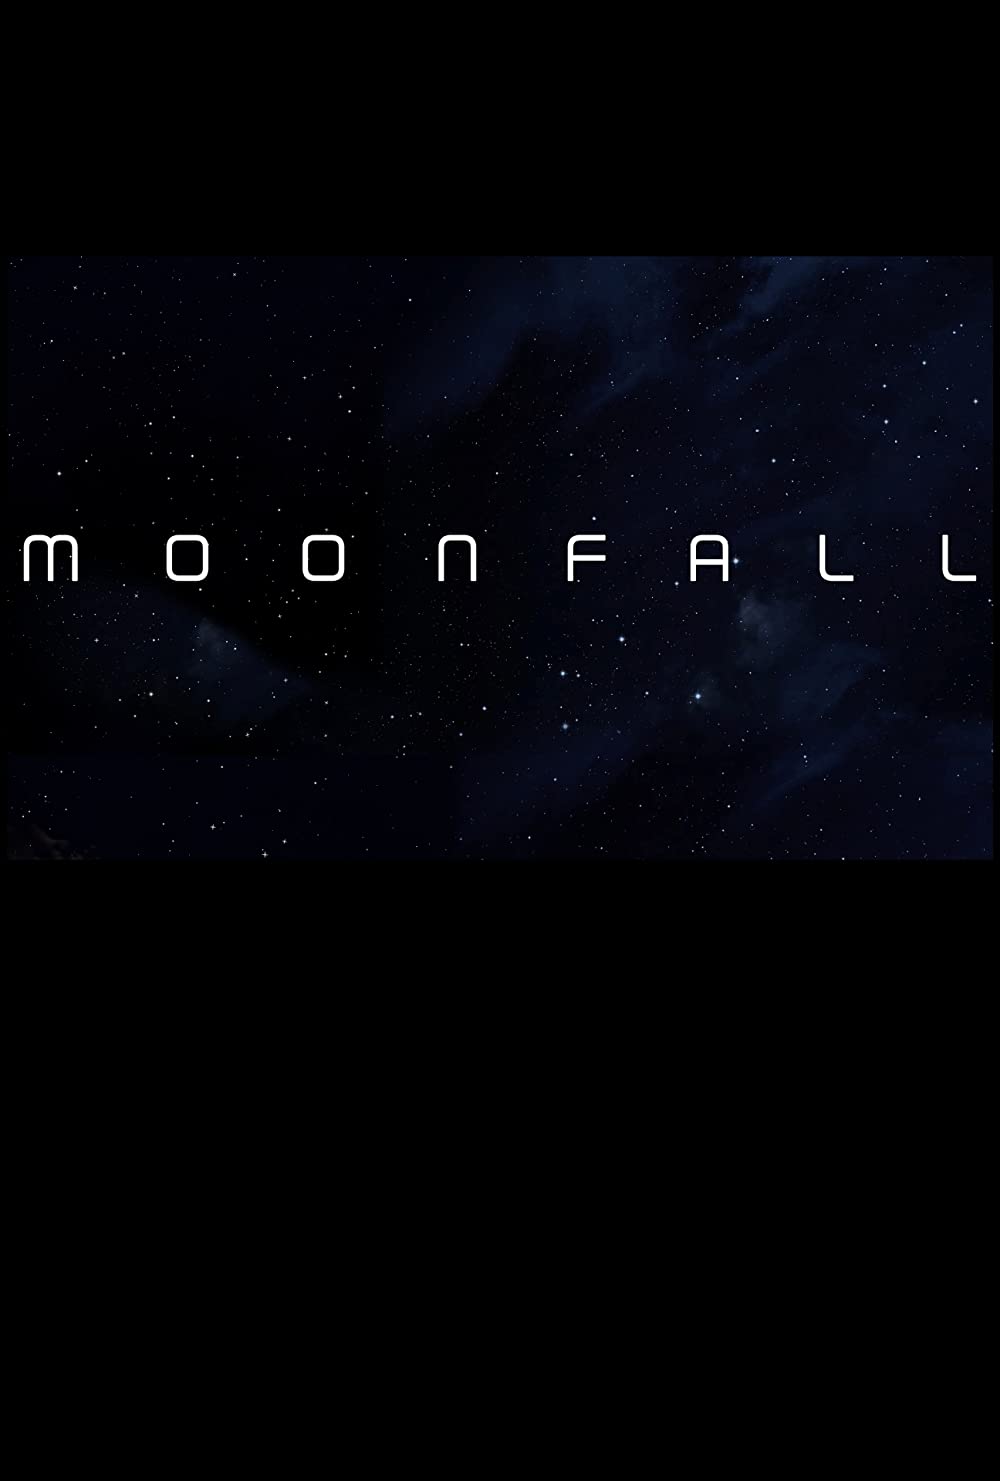 “Moonfall” Trailer Musings